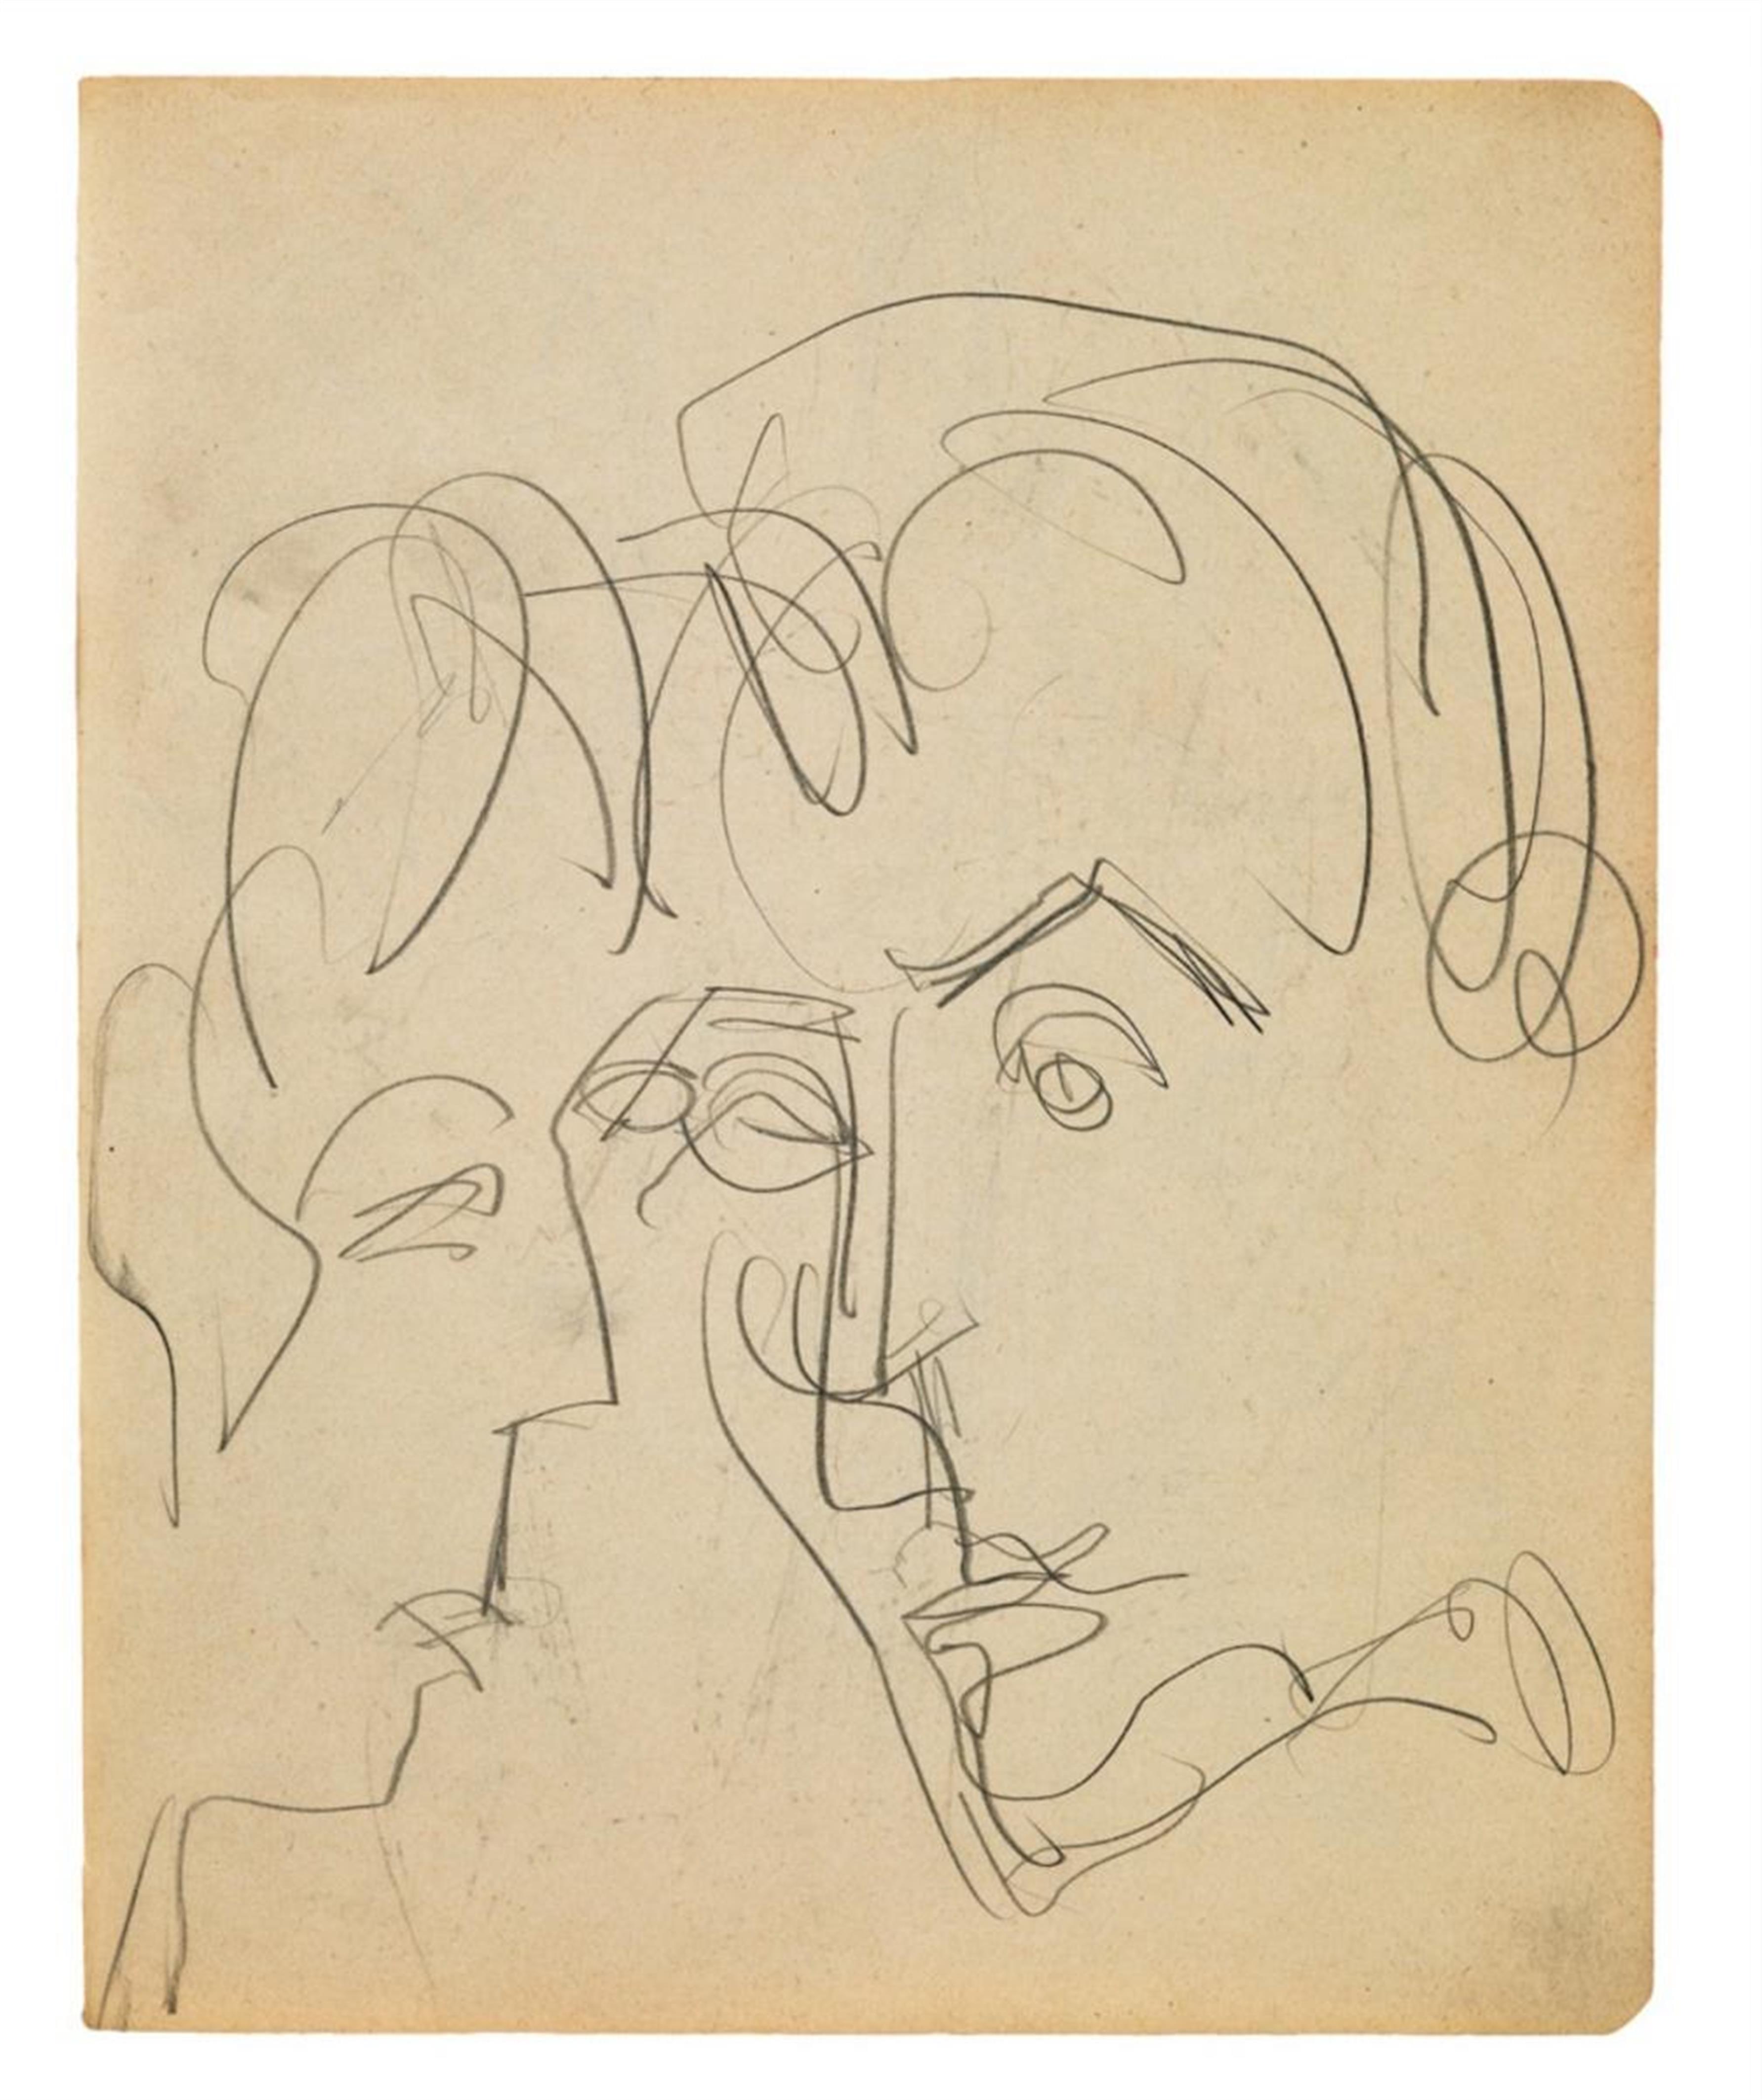 Ernst Ludwig Kirchner - Skizzenbuch - image-9